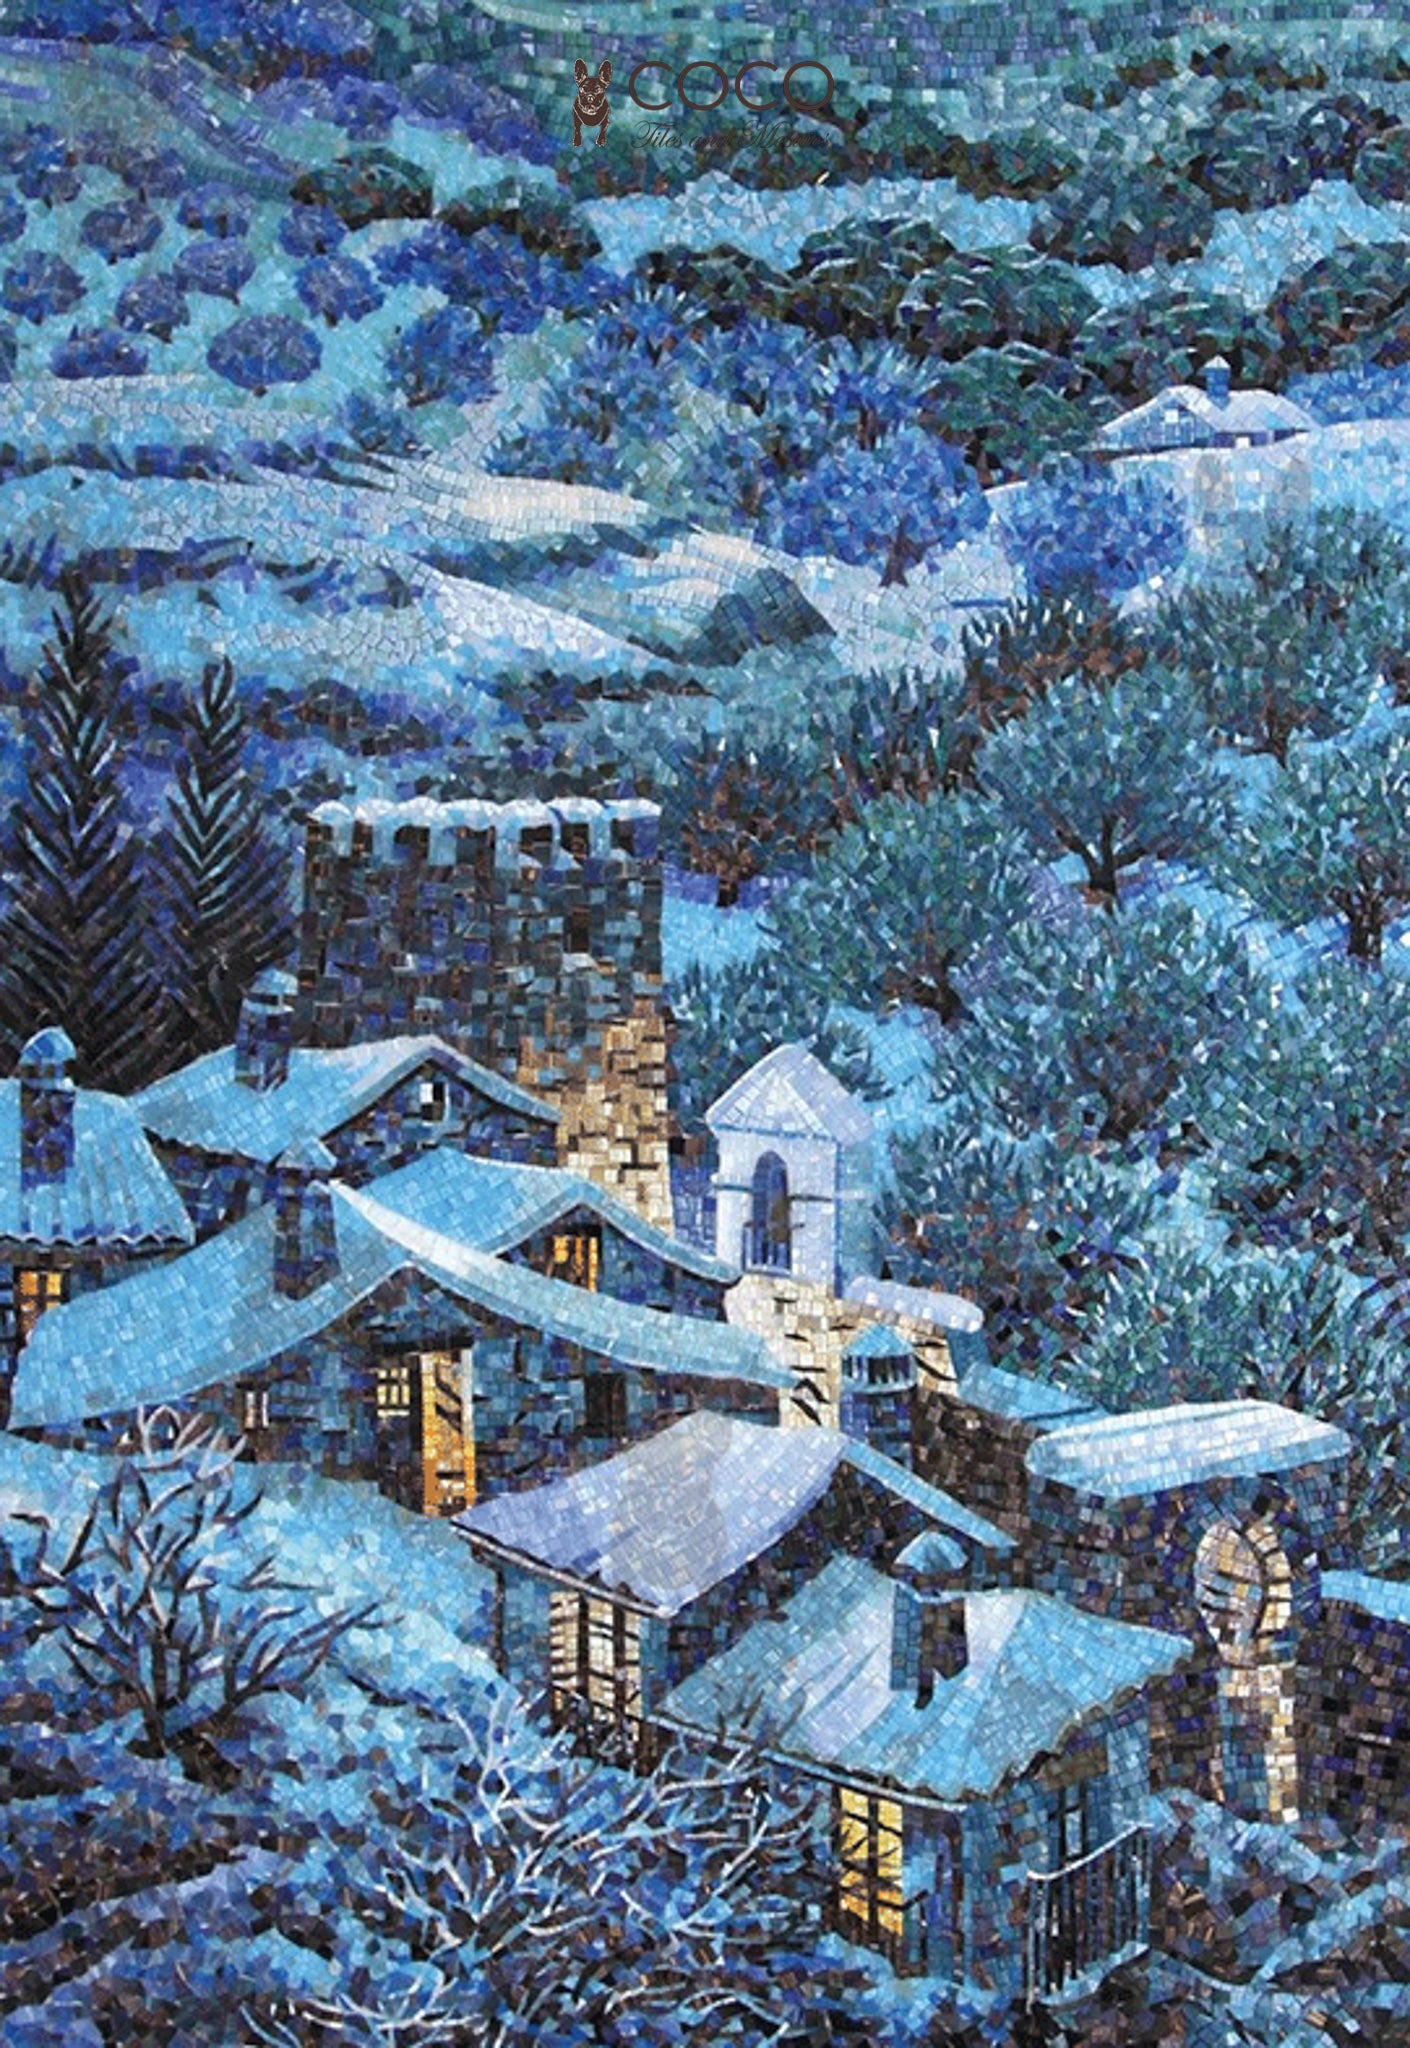 Artistic Mosaic - Winter Village